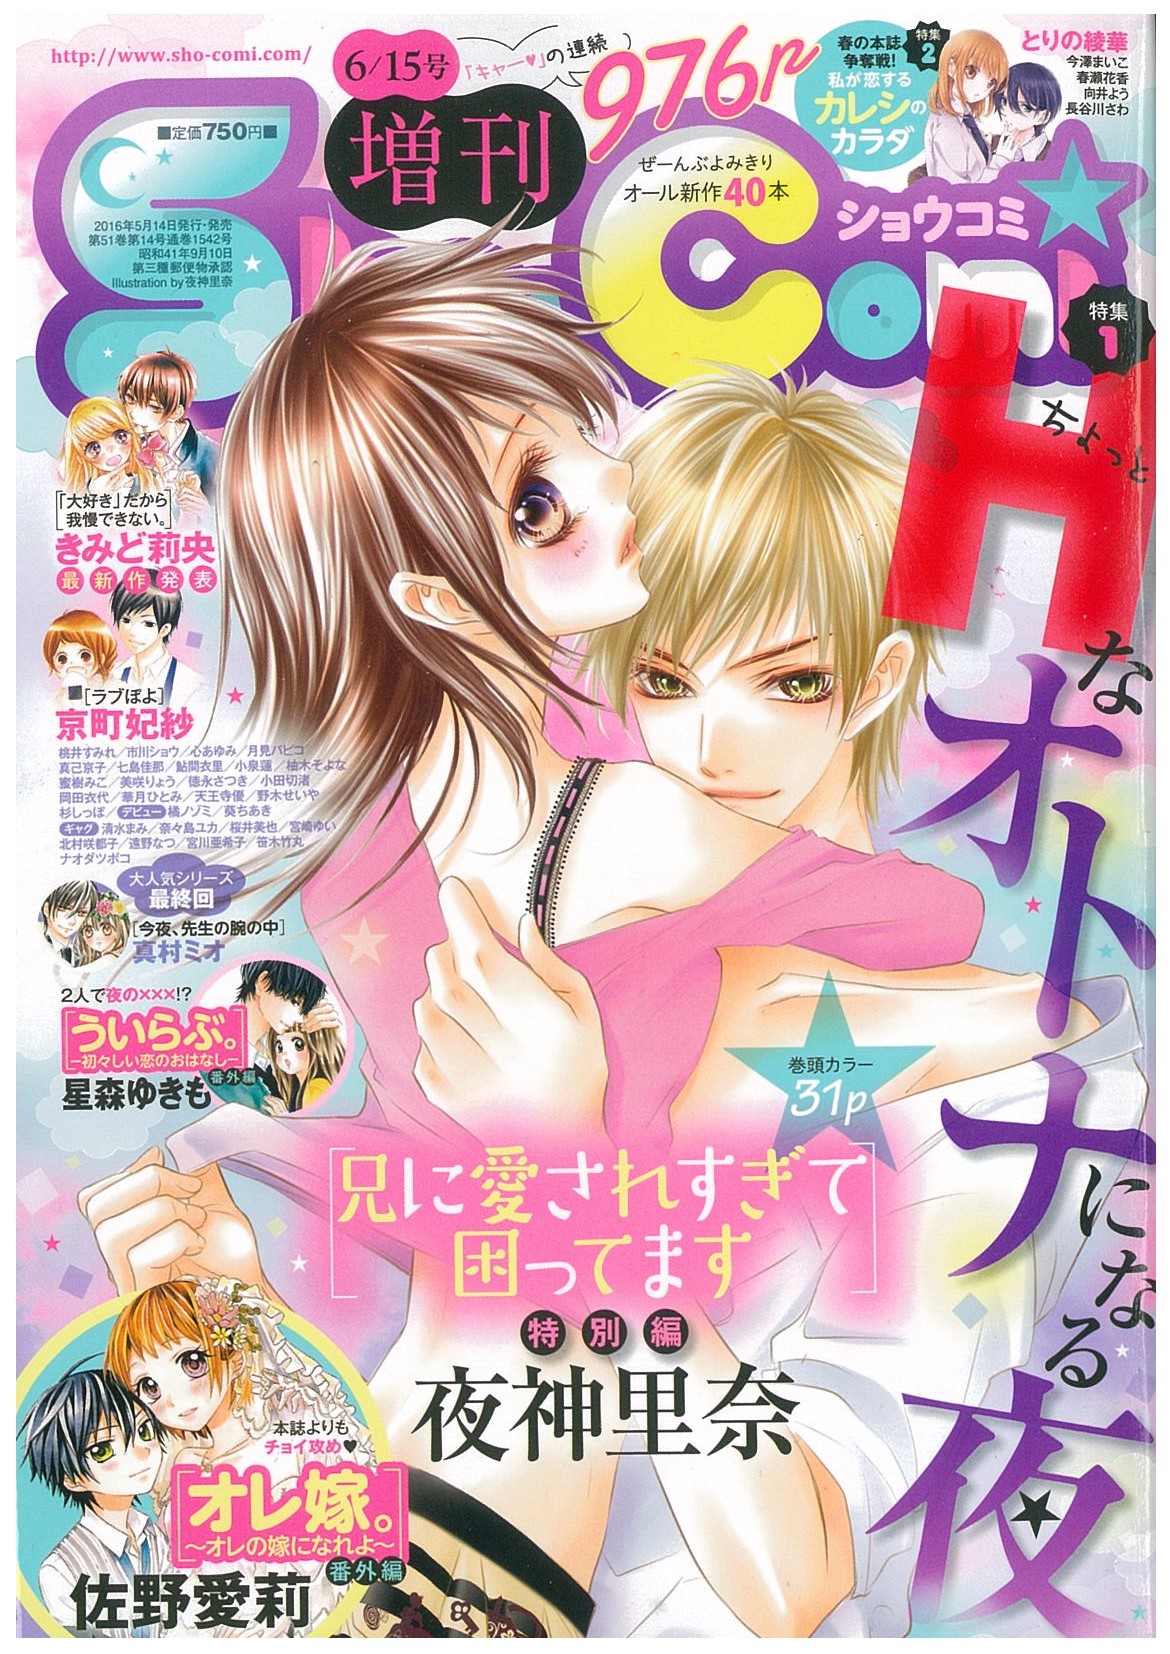 Sho Comi６ １５号増刊 明日発売です Sho Comiねっと 小学館コミック